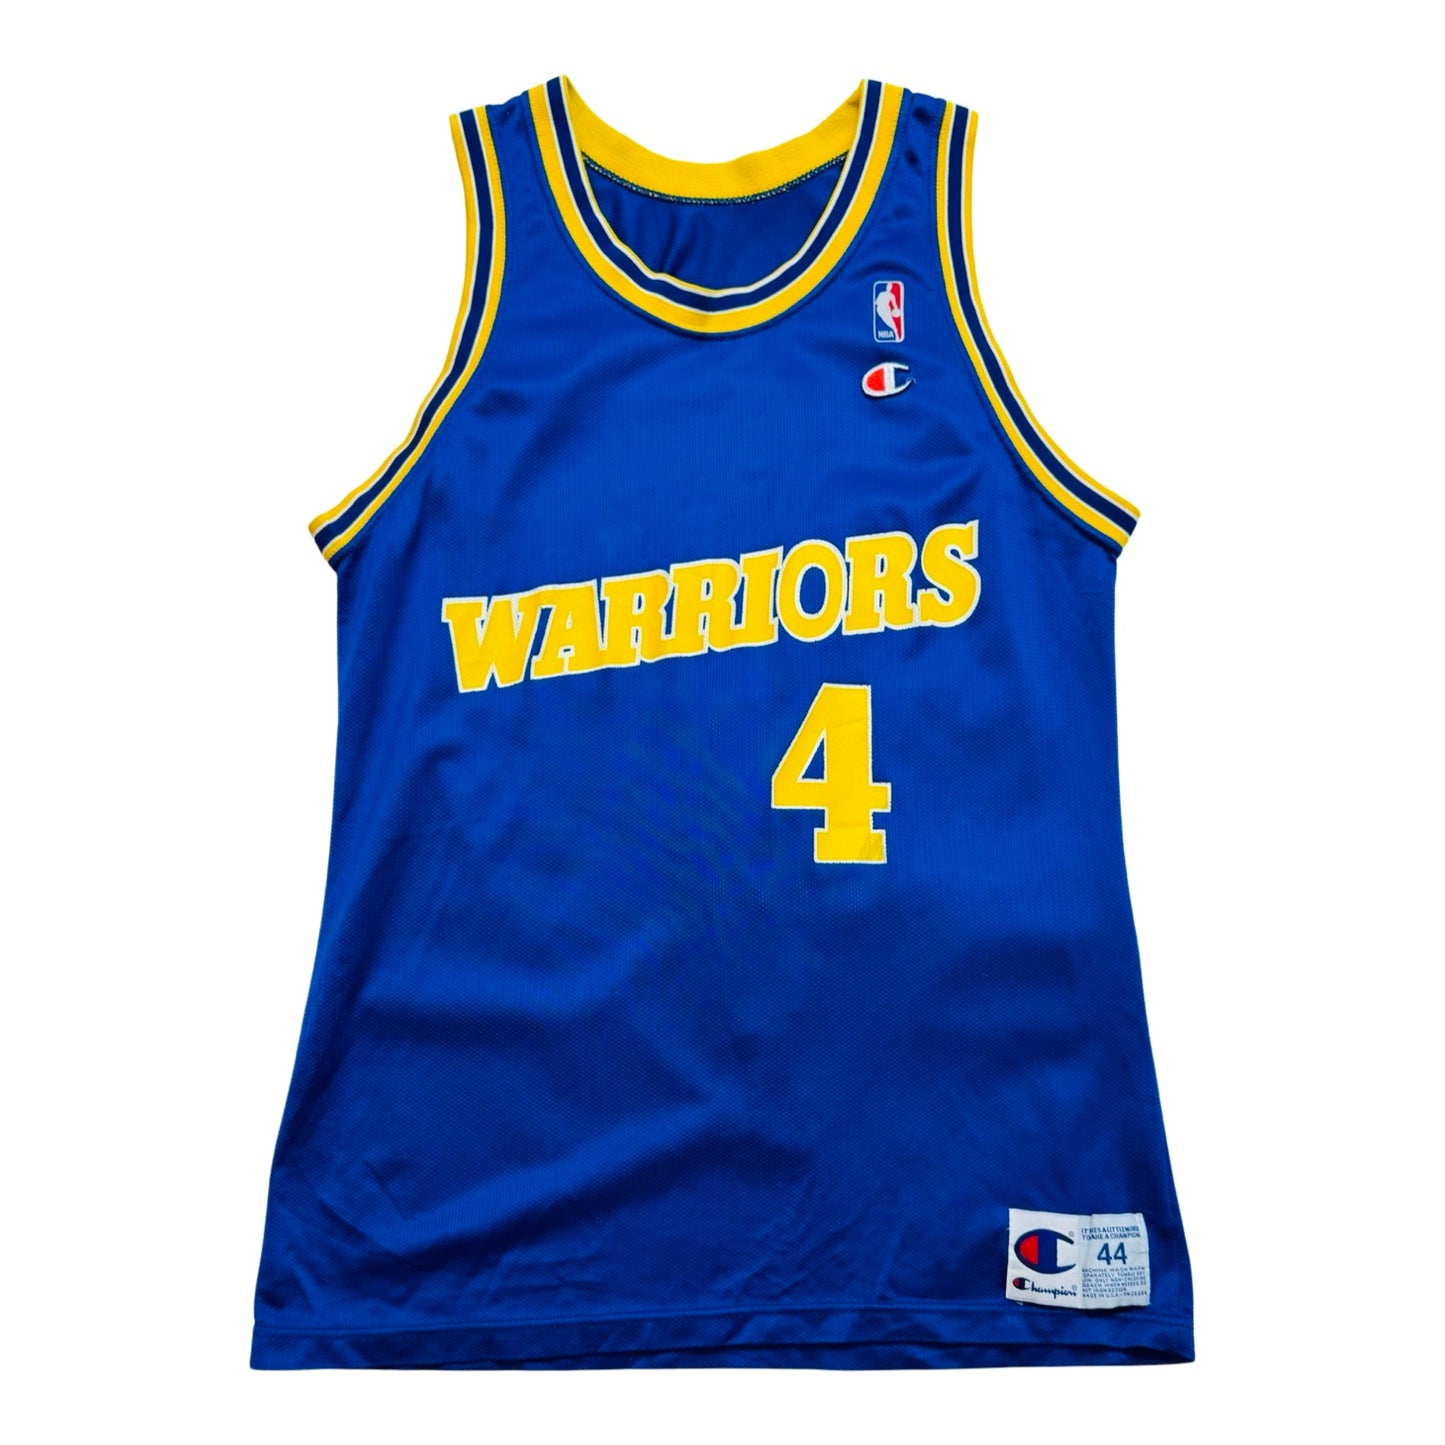 Vintage Golden State Warriors Jersey Men’s 44 Chris Webber NBA Champion Jersey Size L